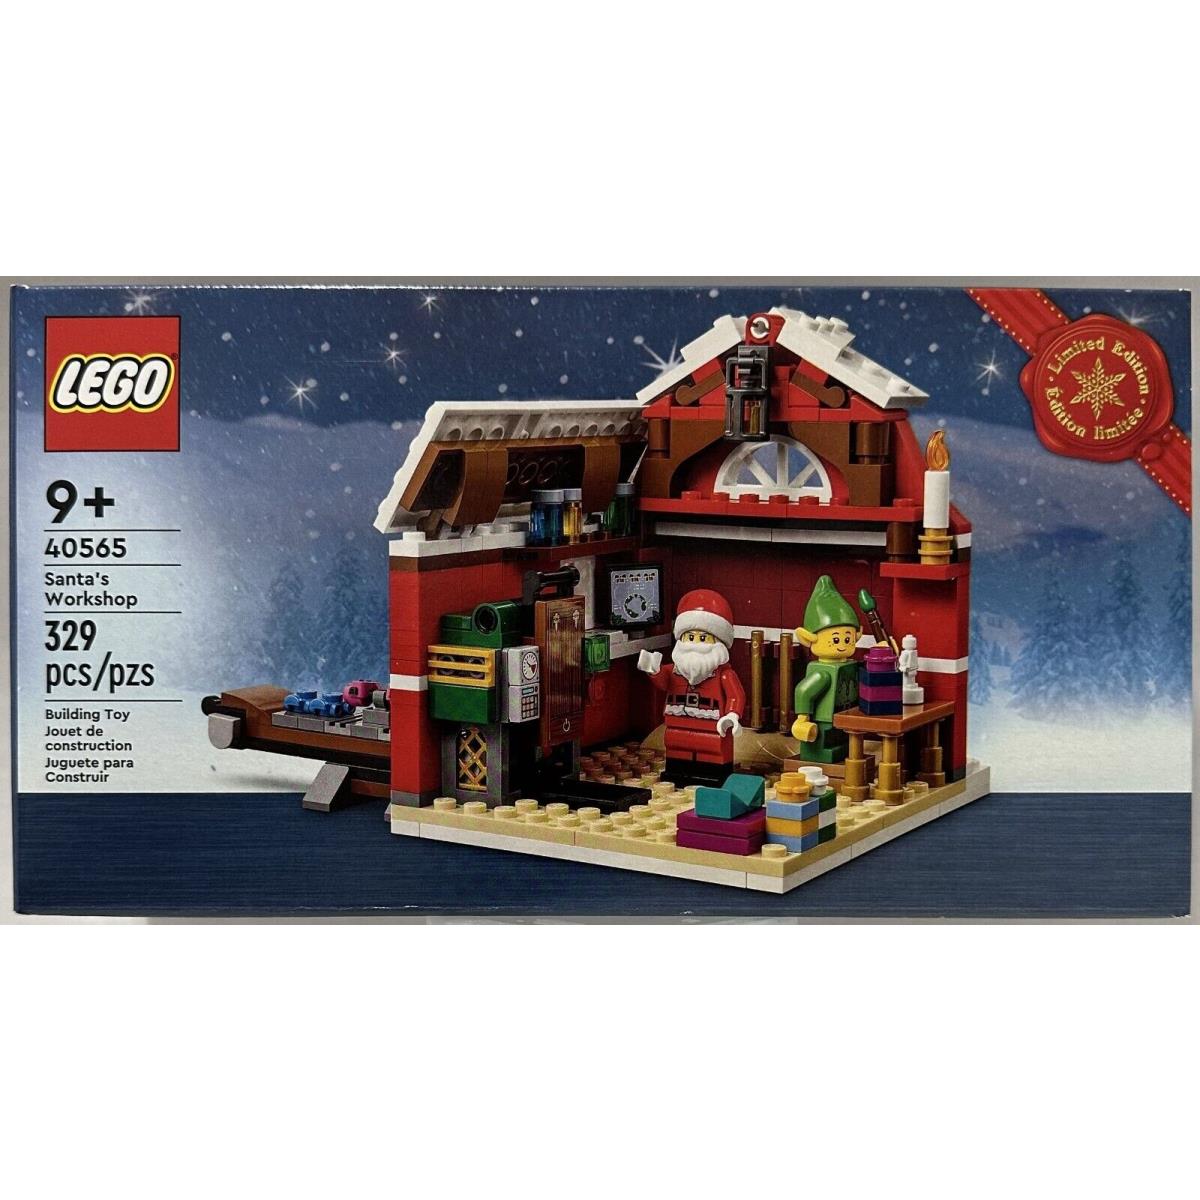 Lego 40565 Santa s Workshop 329pcs 9+ Limited Edition